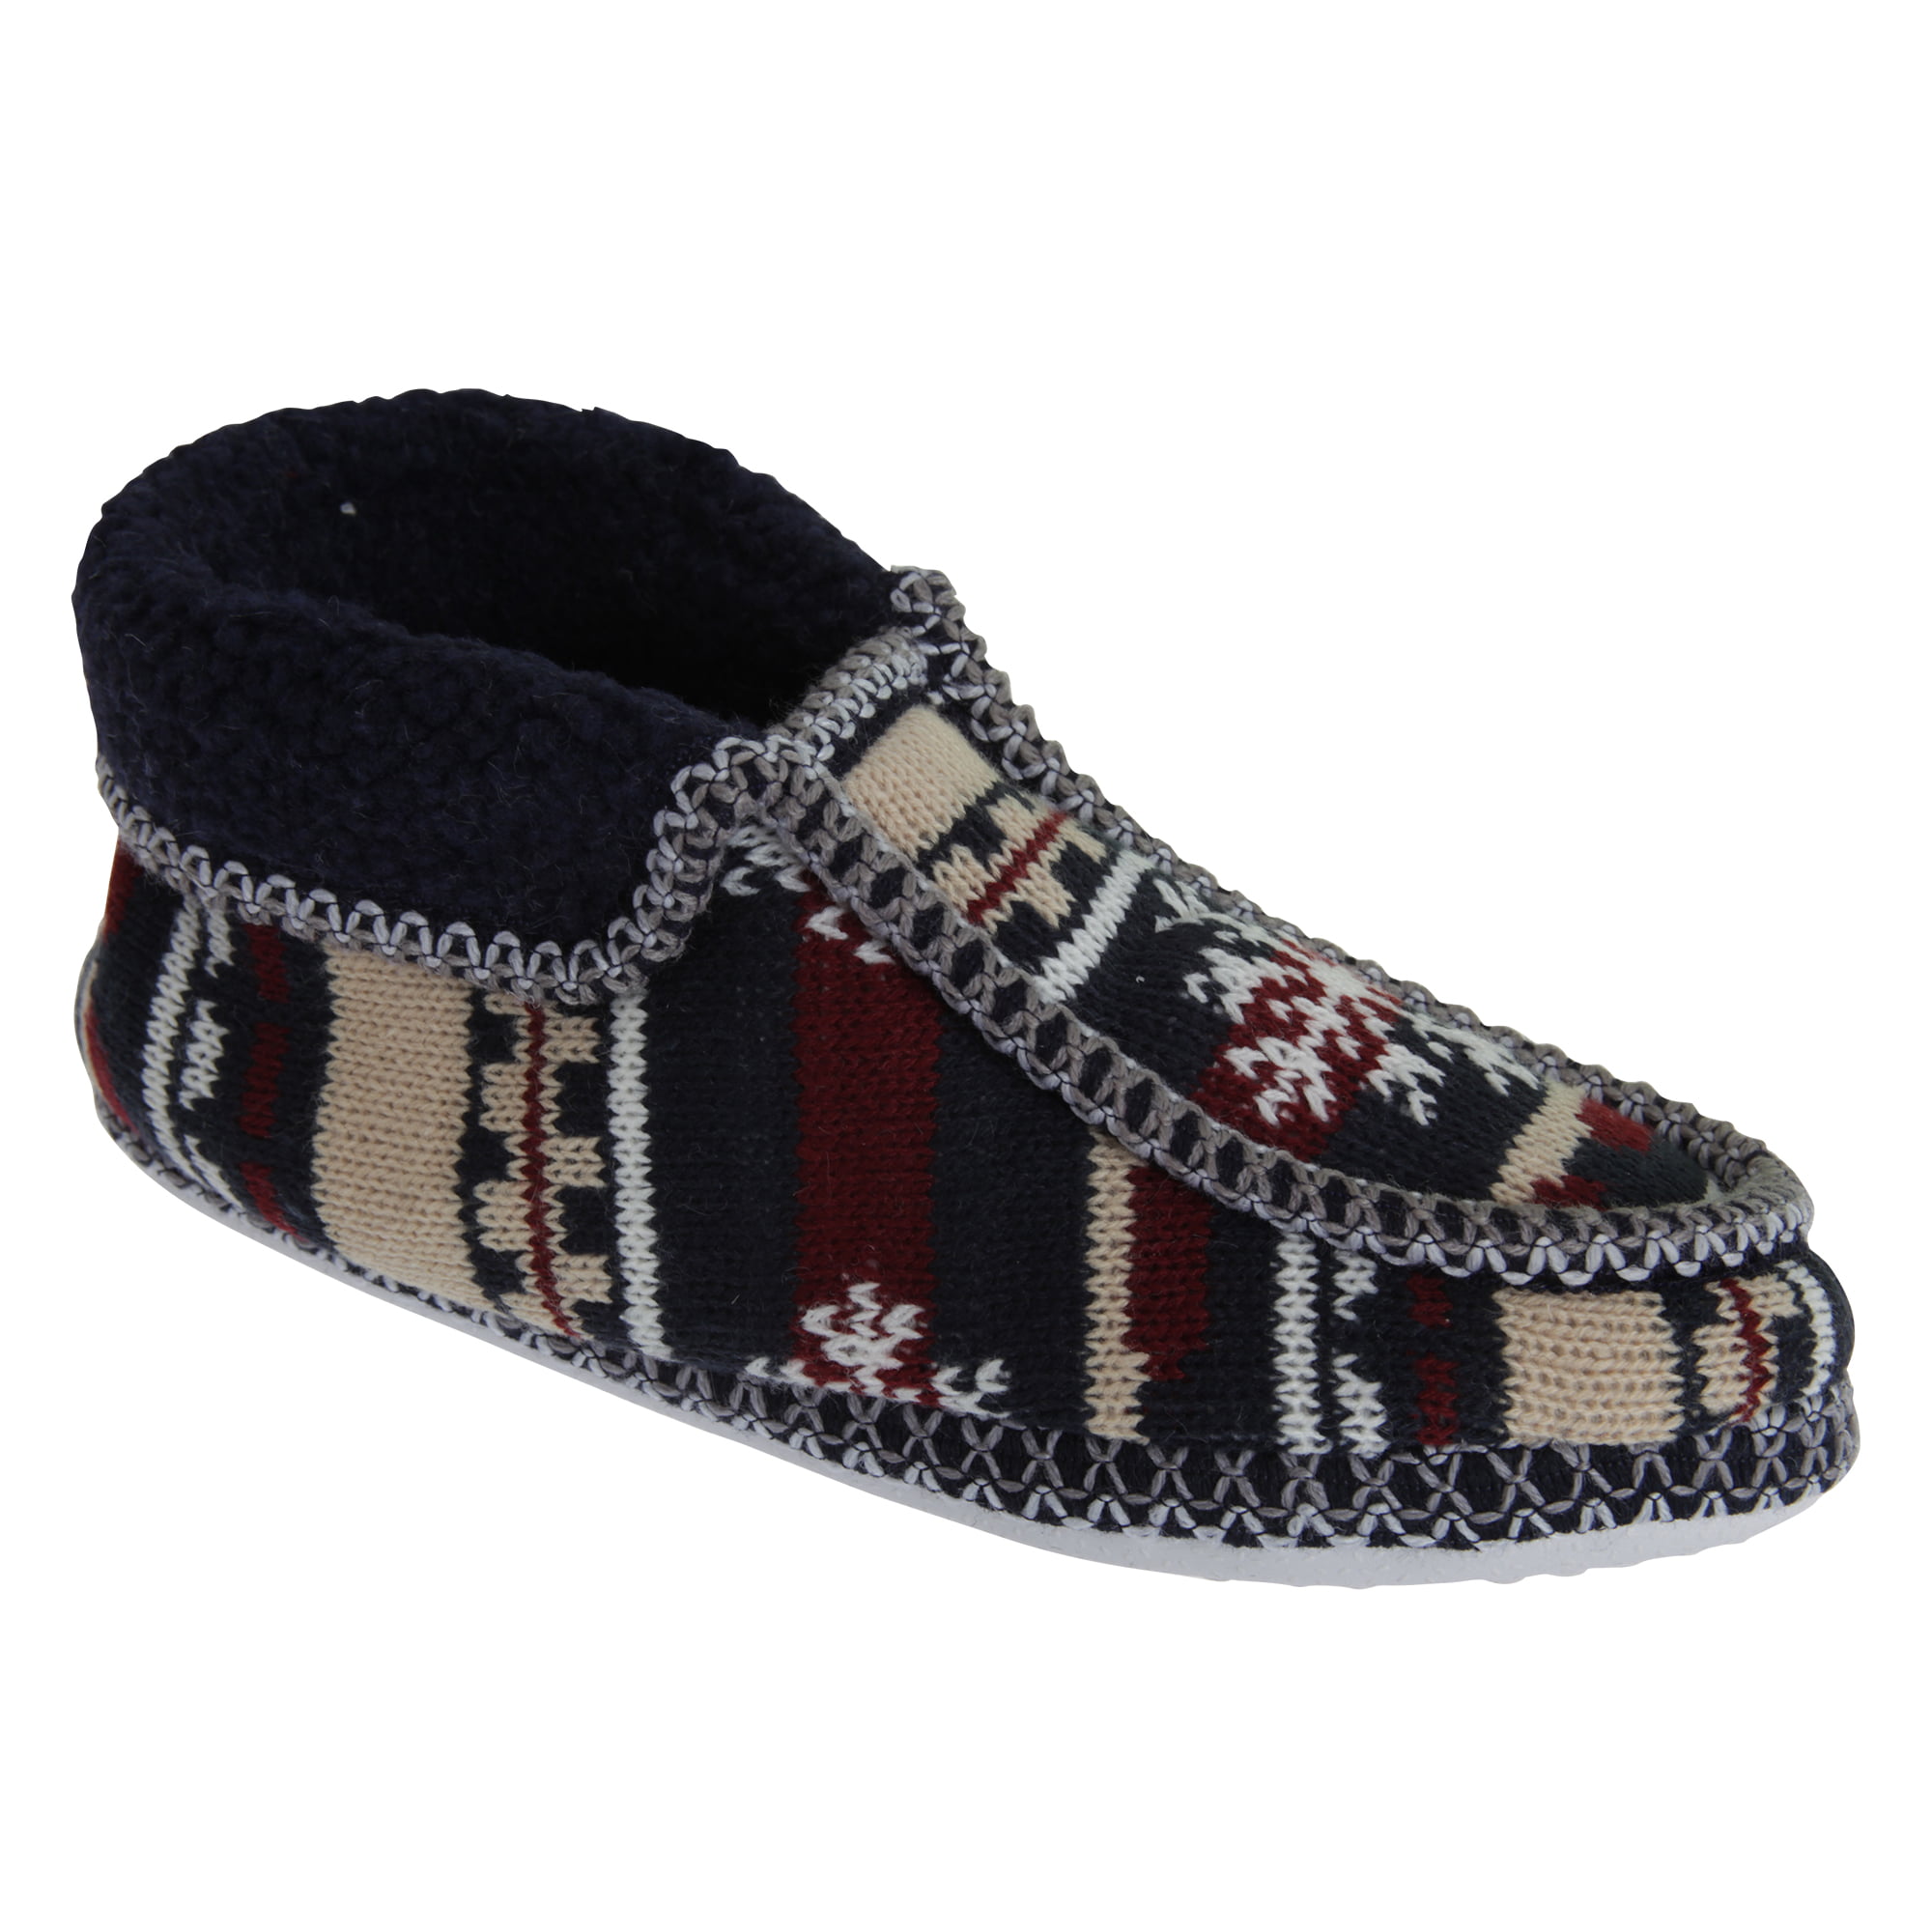 Norwegian style slippers